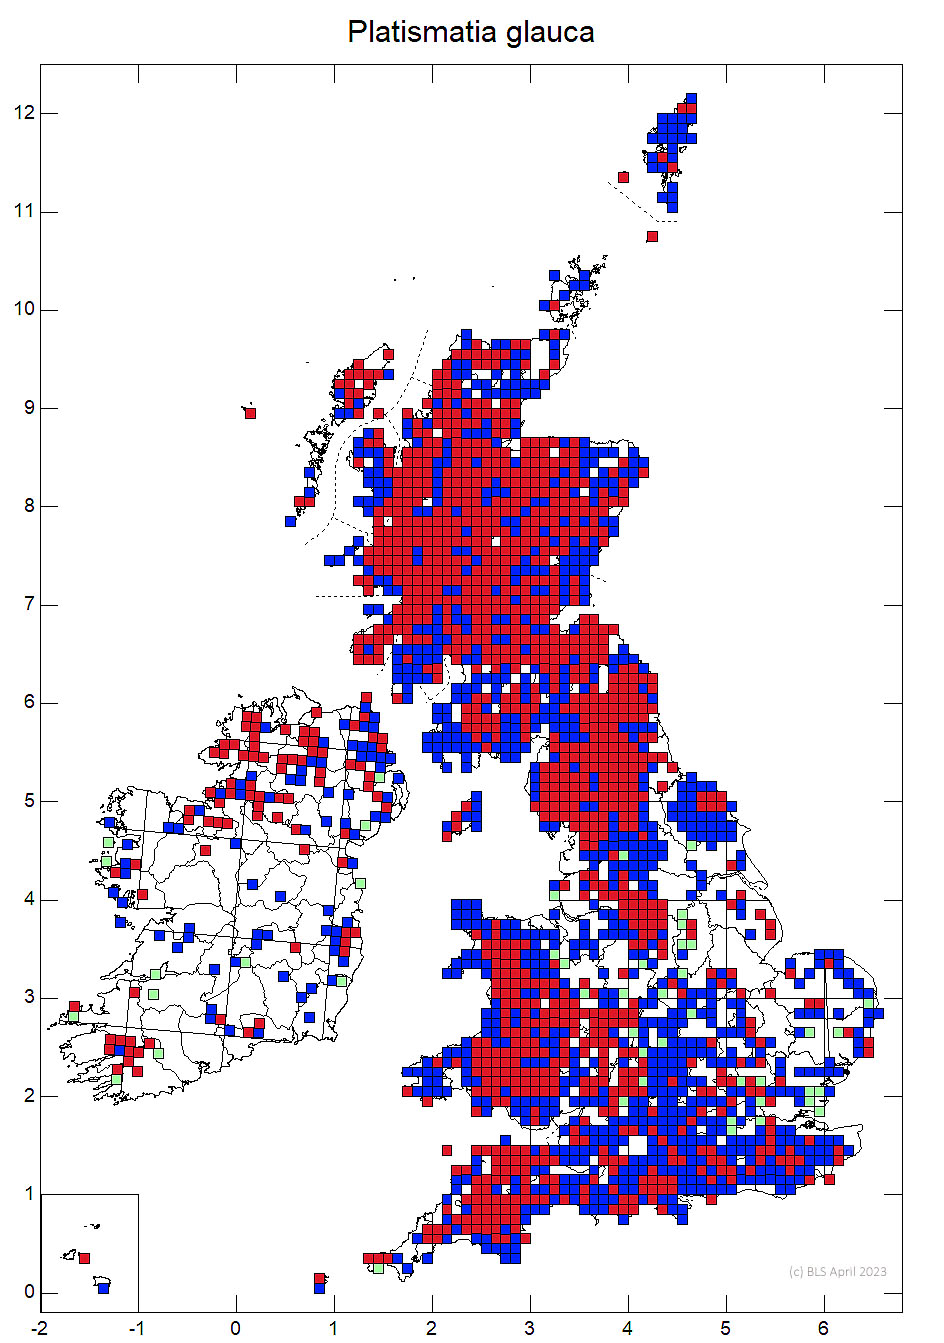 Platismatia glauca 10km sq distribution map